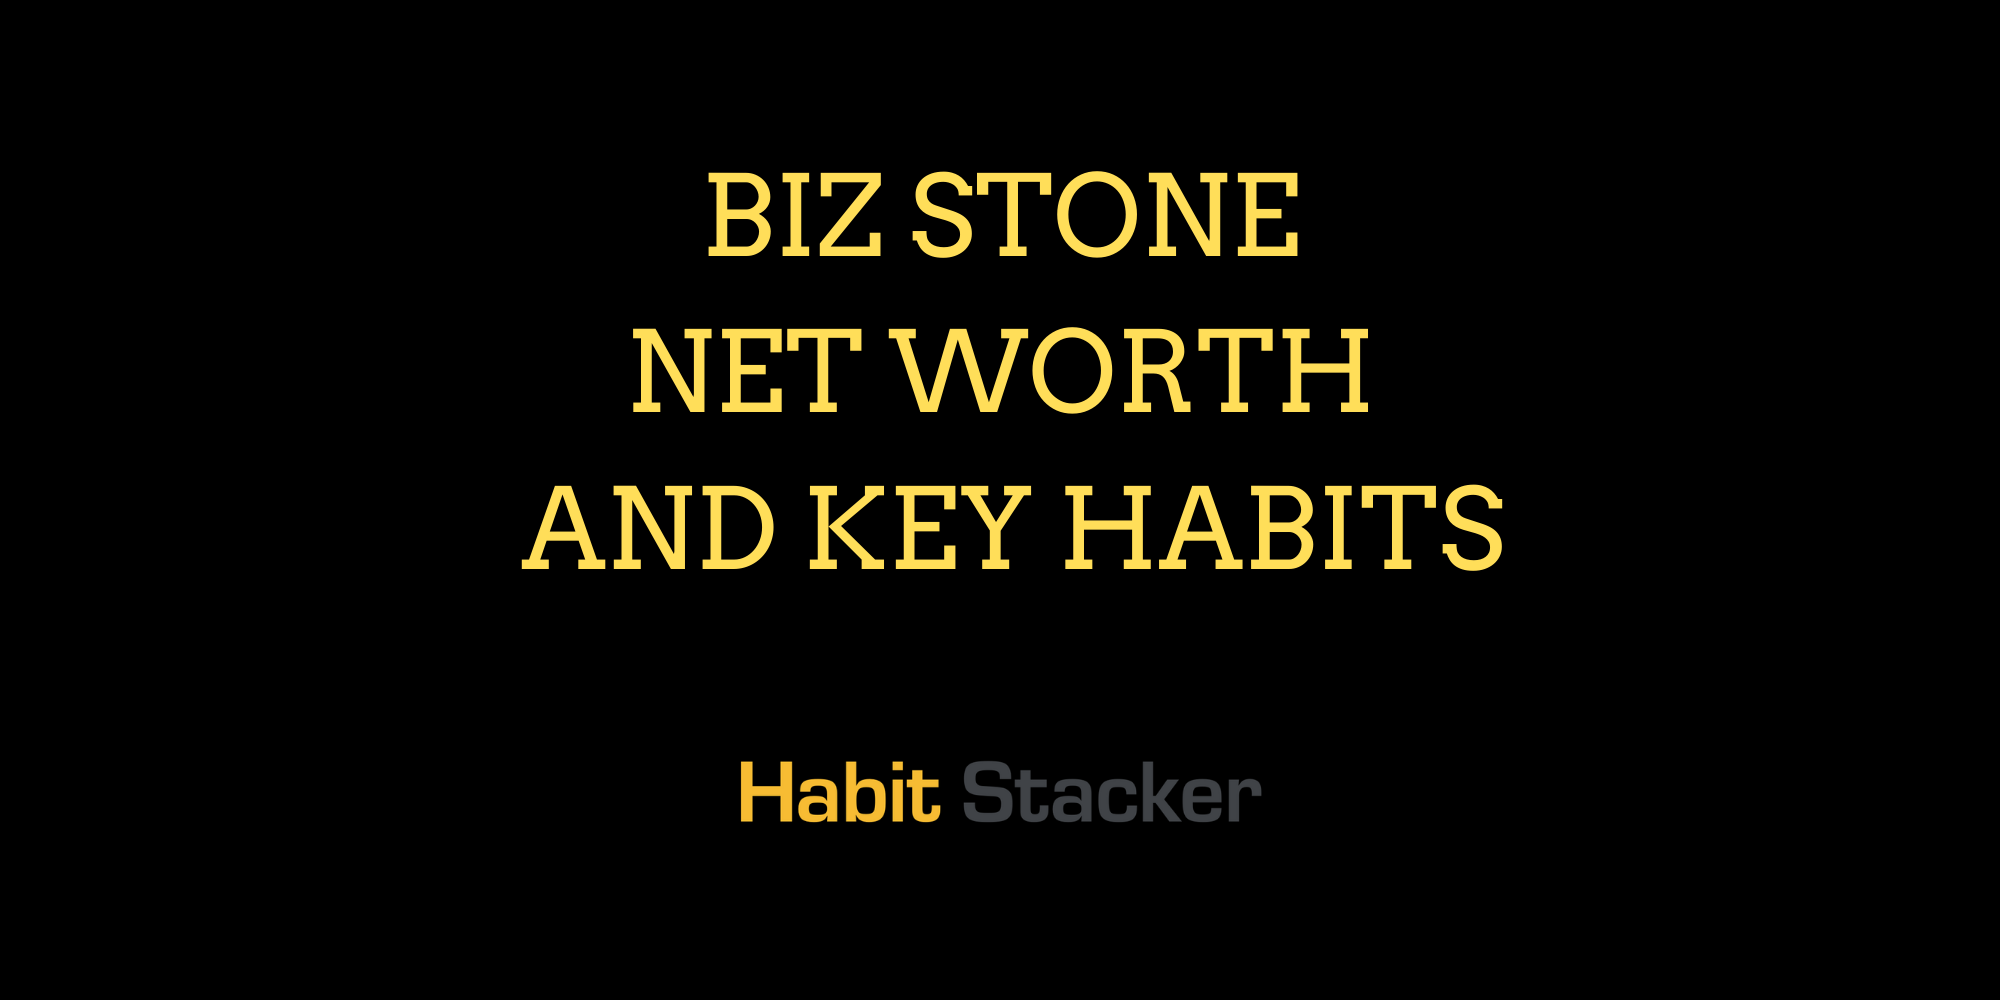 Biz Stone Net Worth and Key Habits